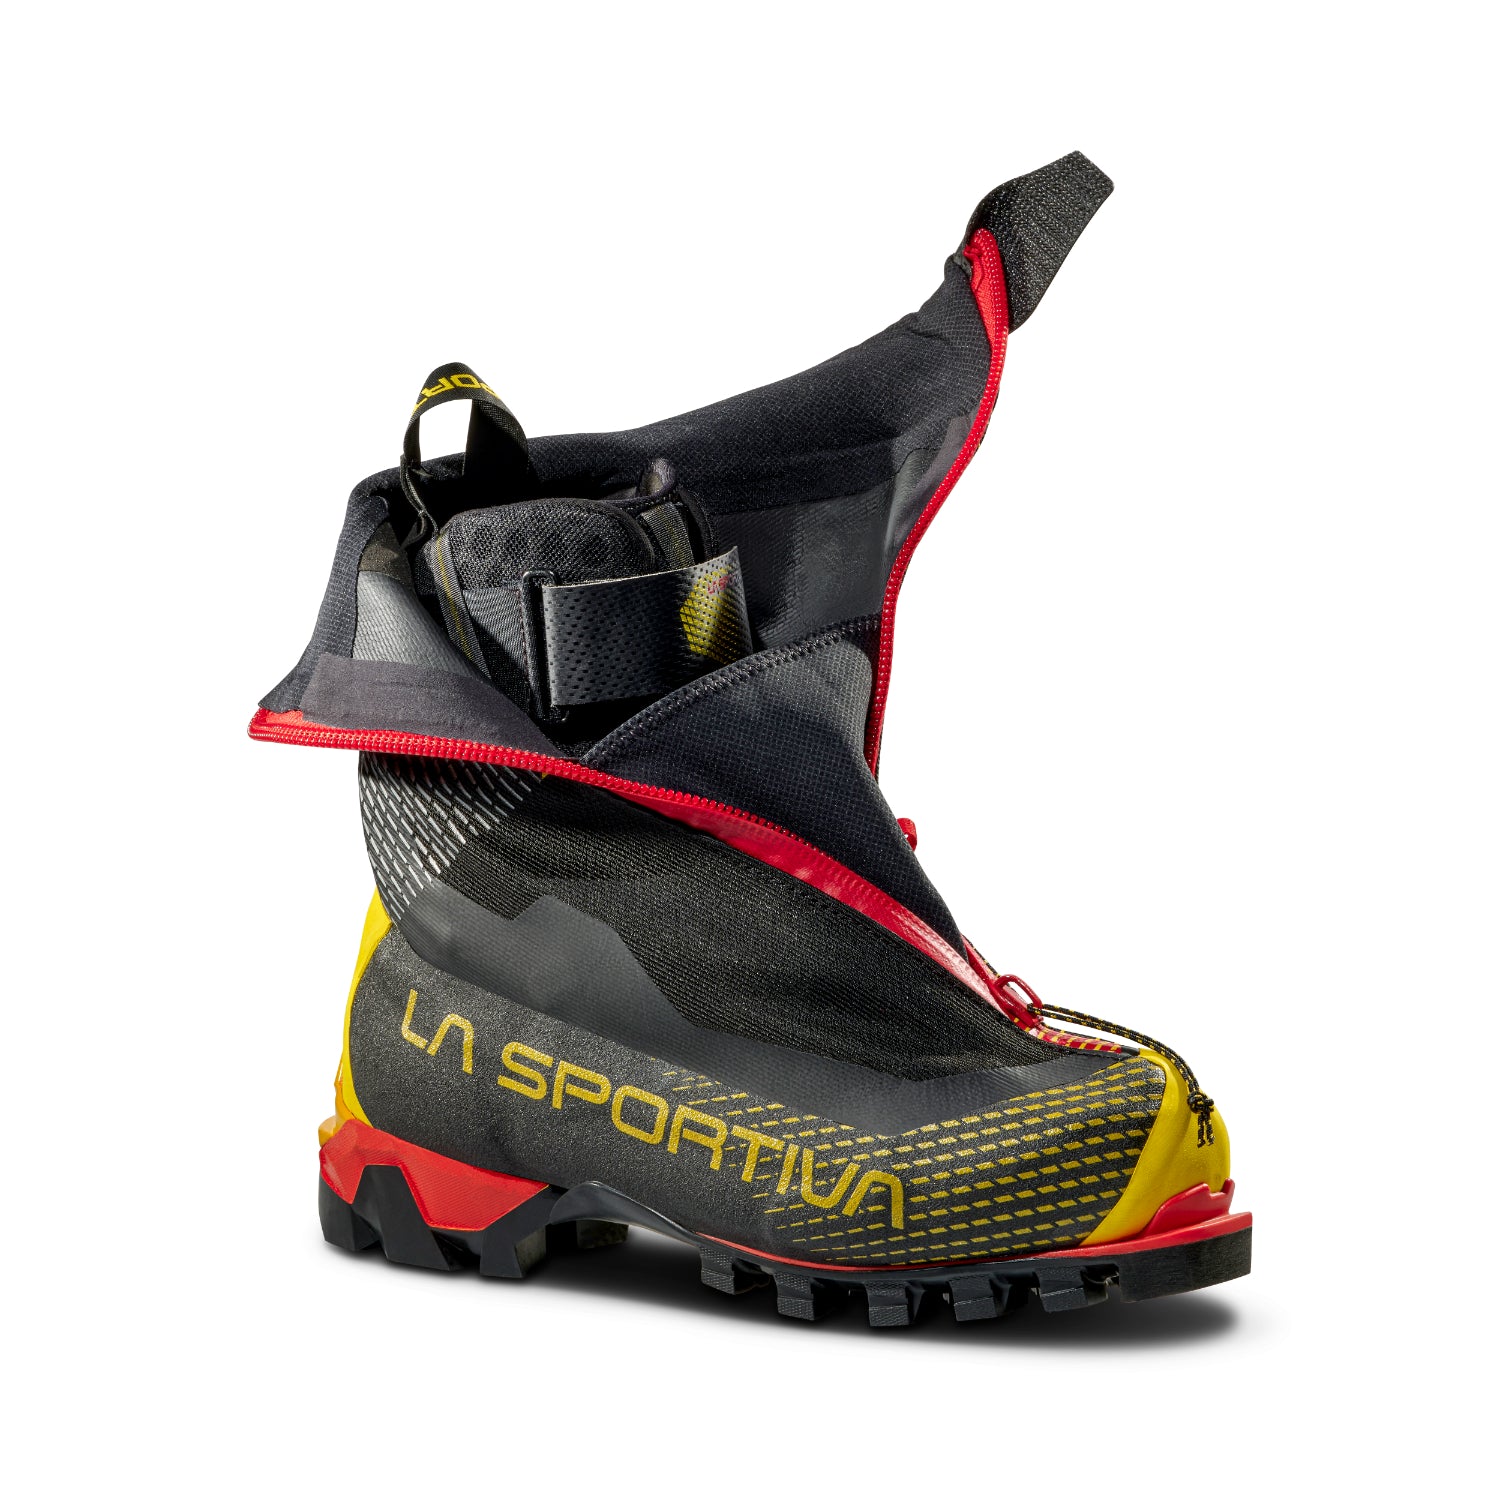 La Sportiva G-Tech Mountaineering Boot Review – Climb On Equipment